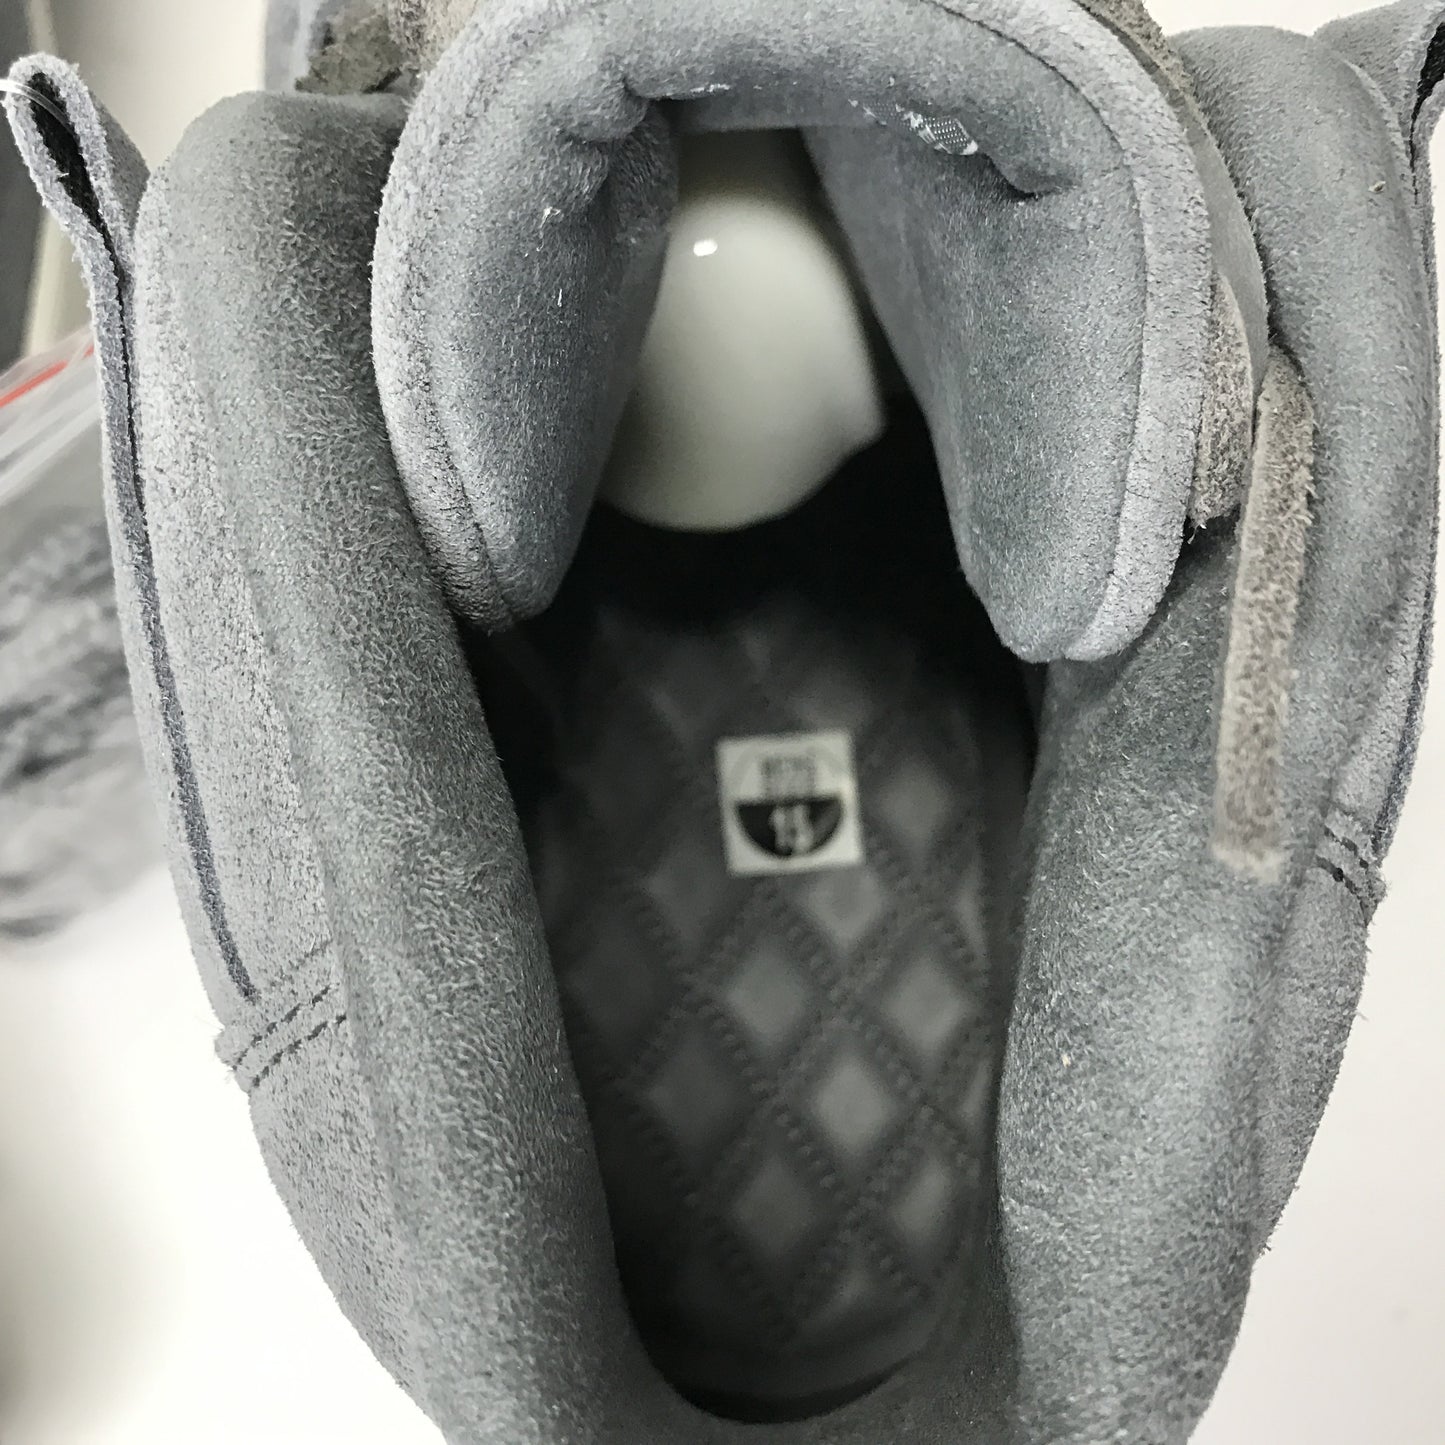 DS Nike Air Jordan 11 XI Retro Prem Pinnacle Gris Gamuza Talla 15